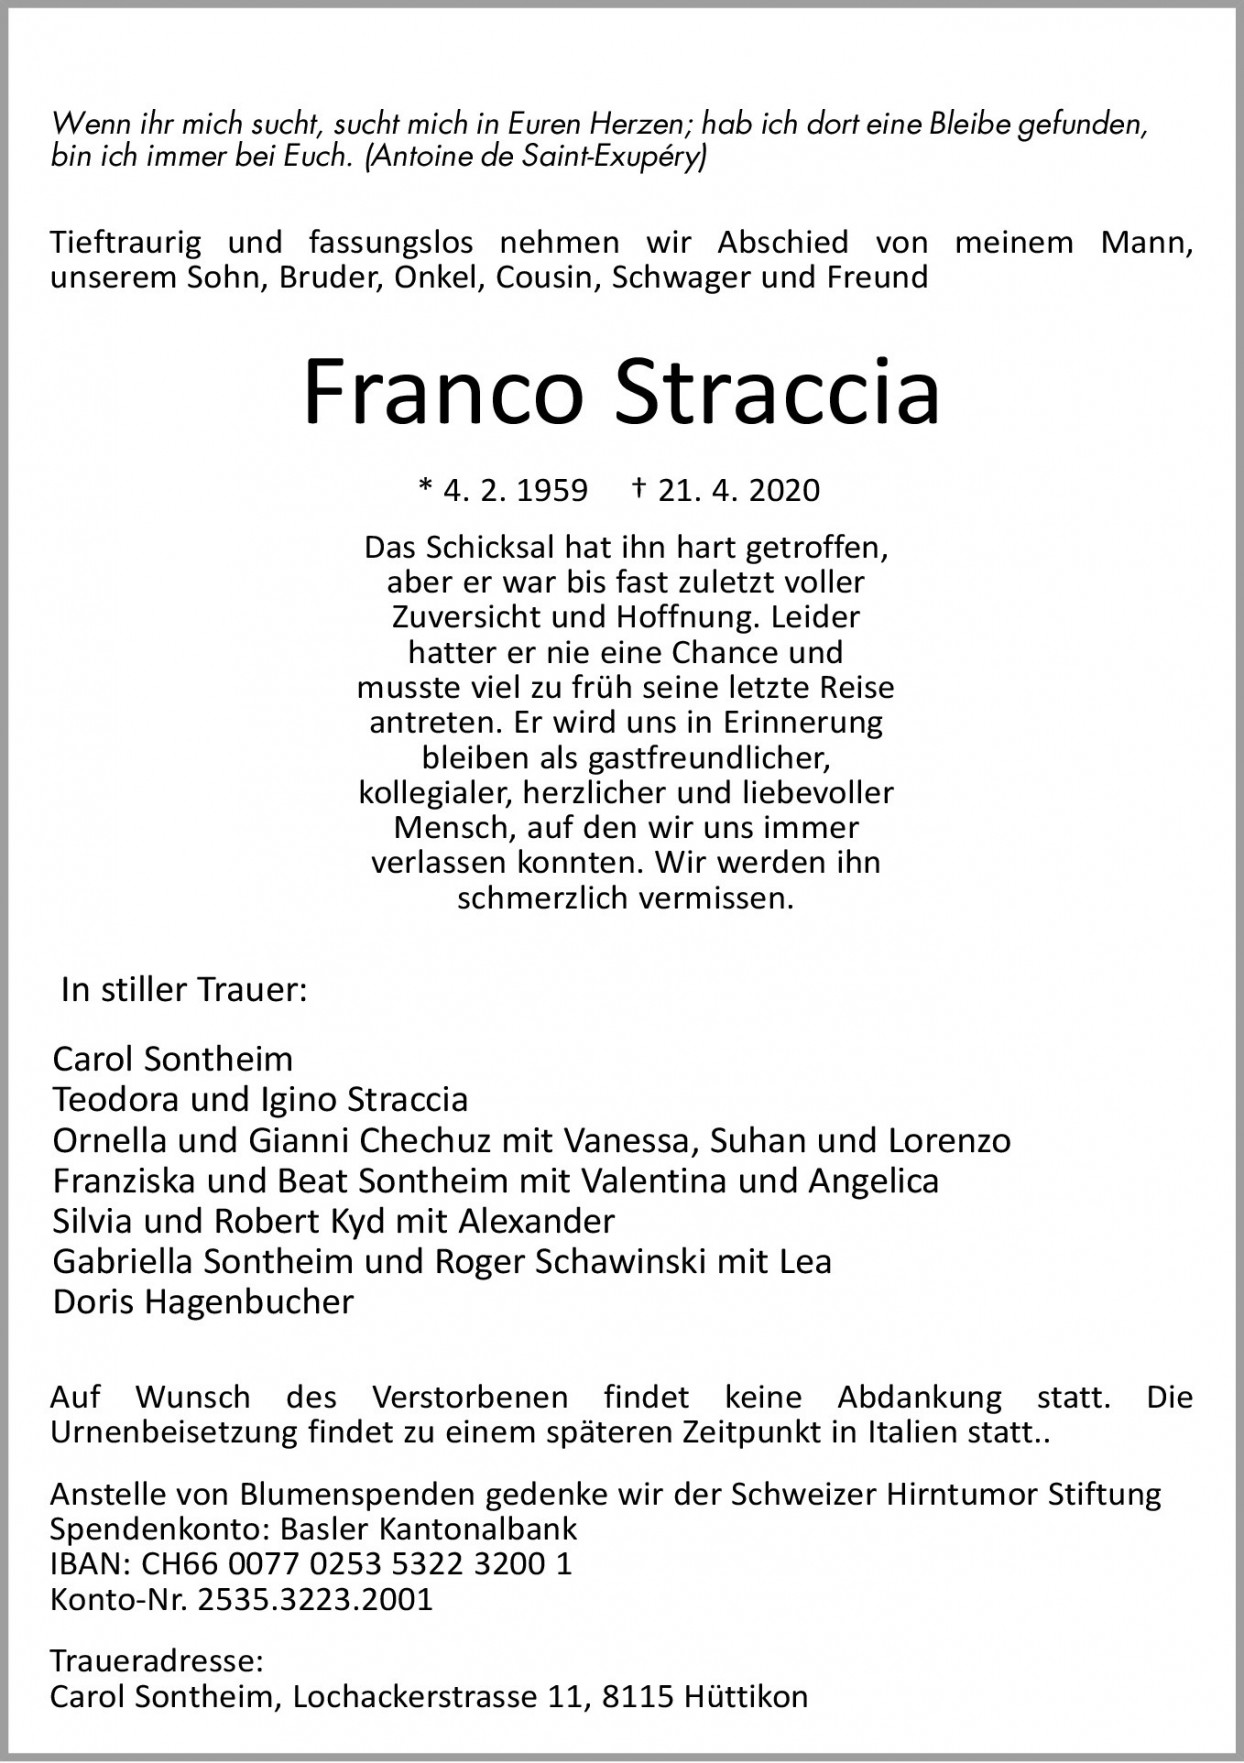 Franco Straccia